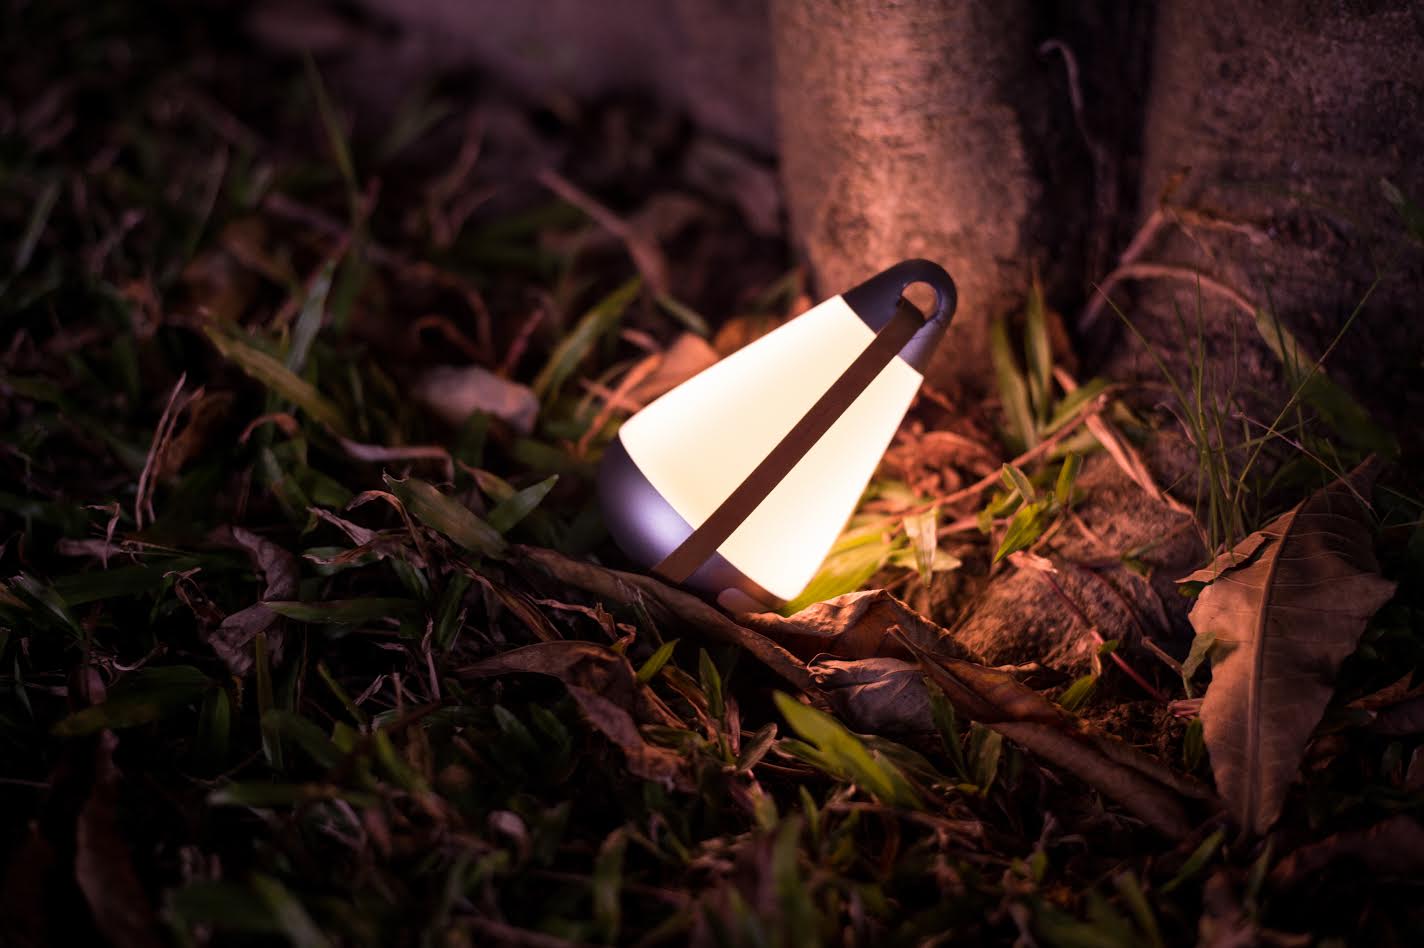 Room USB camping light indiegogo